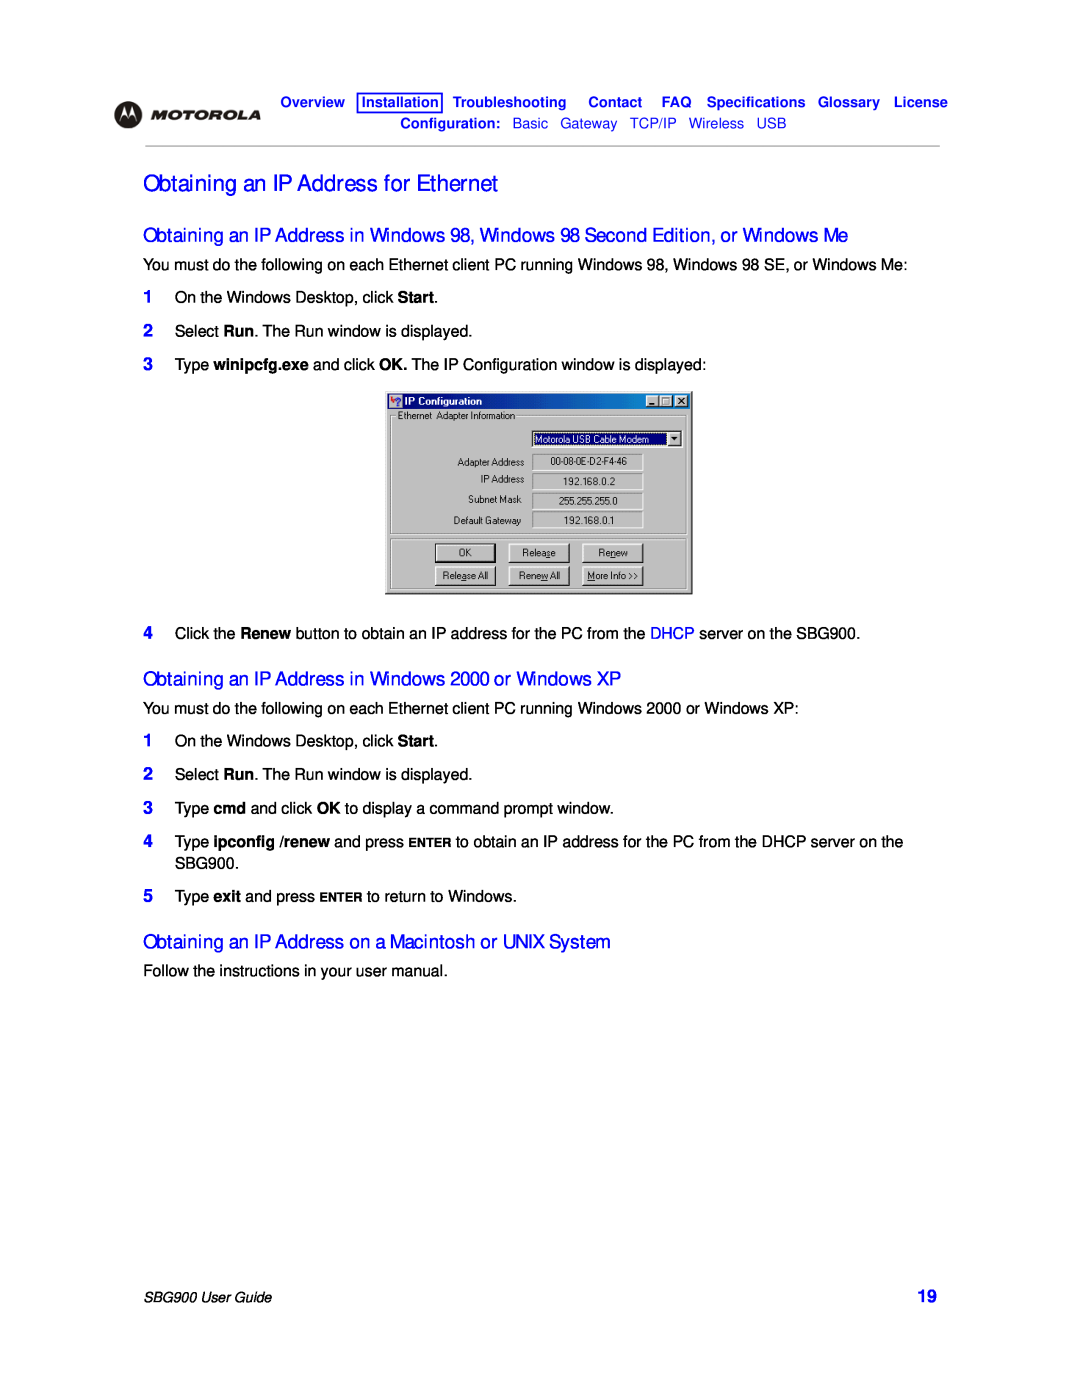 Motorola SBG900 manual Obtaining an IP Address for Ethernet, Obtaining an IP Address in Windows 2000 or Windows XP 